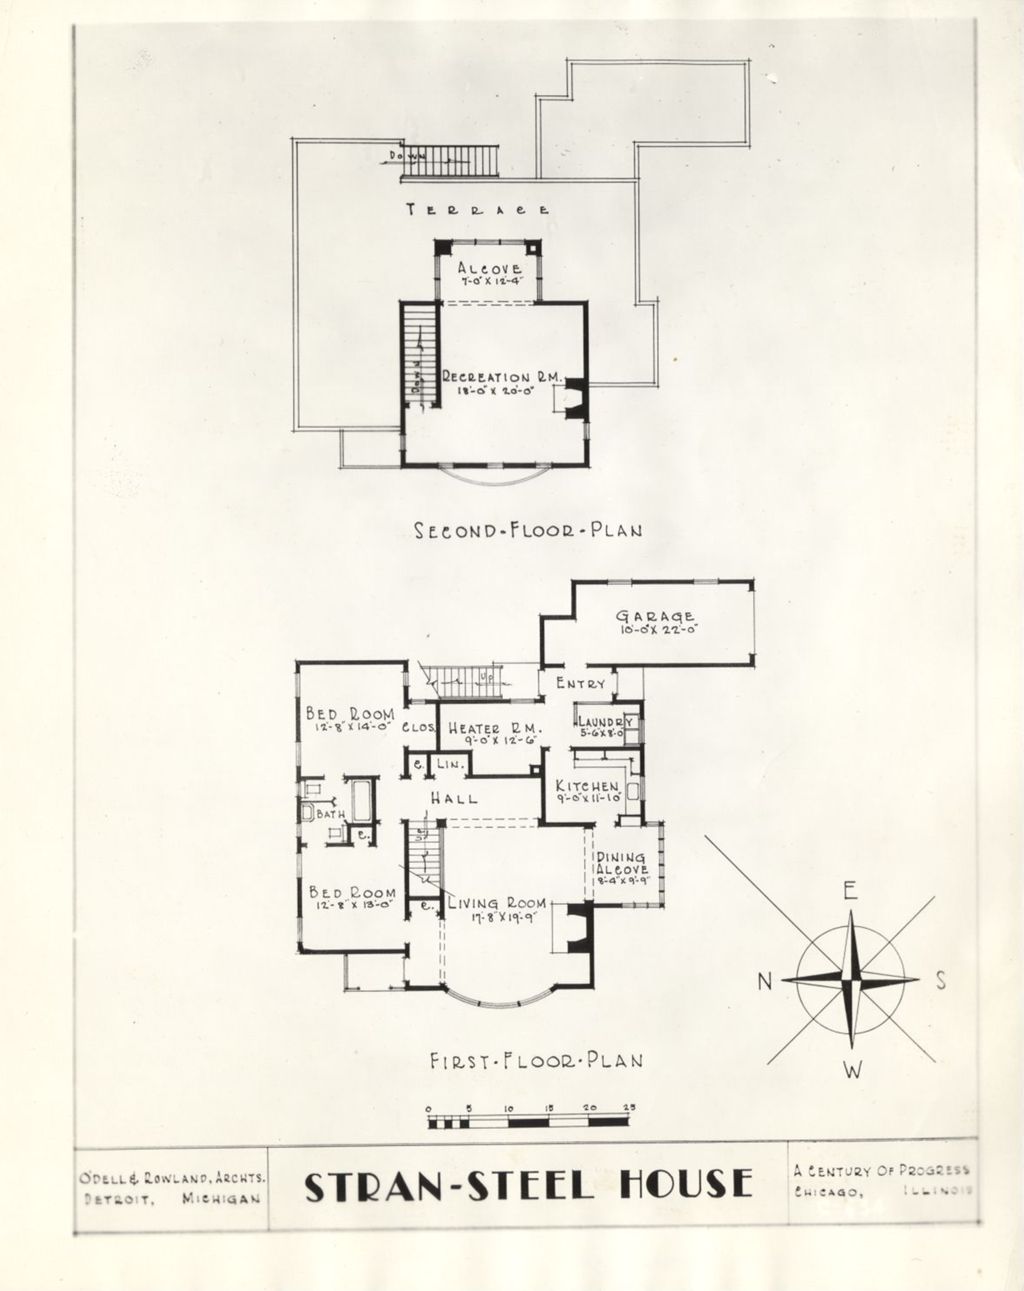 Floor plan for the Stran-Steel House exhibit